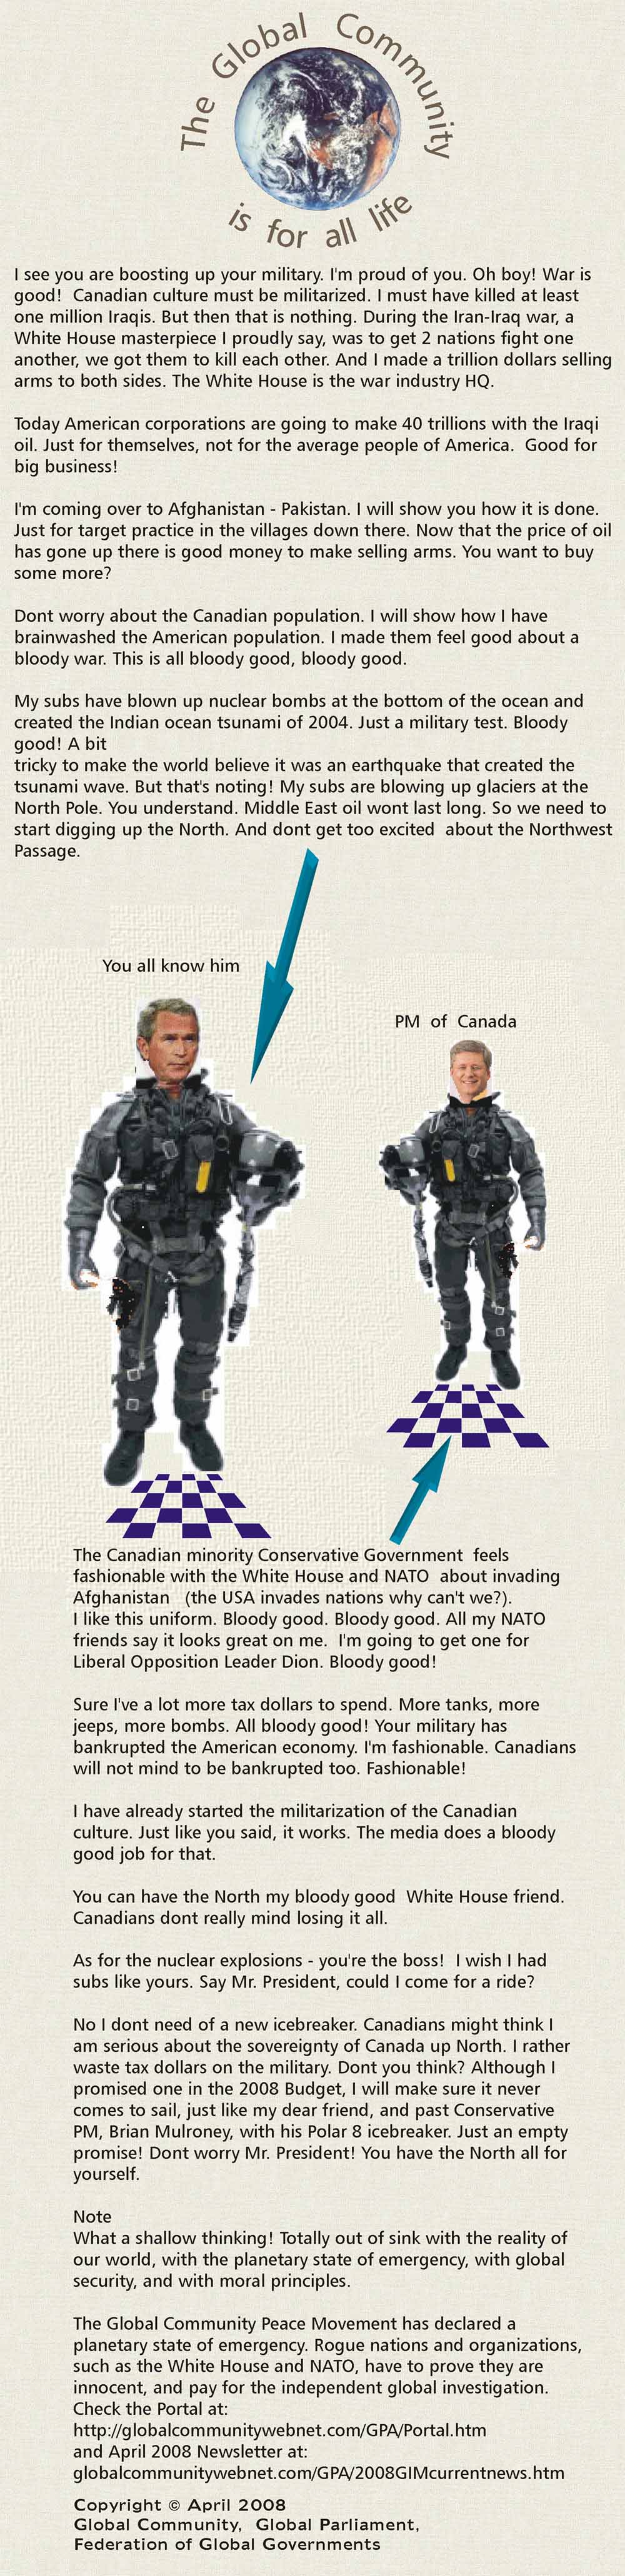 Friendly understanding between President Bush and PM Harper of Canada 